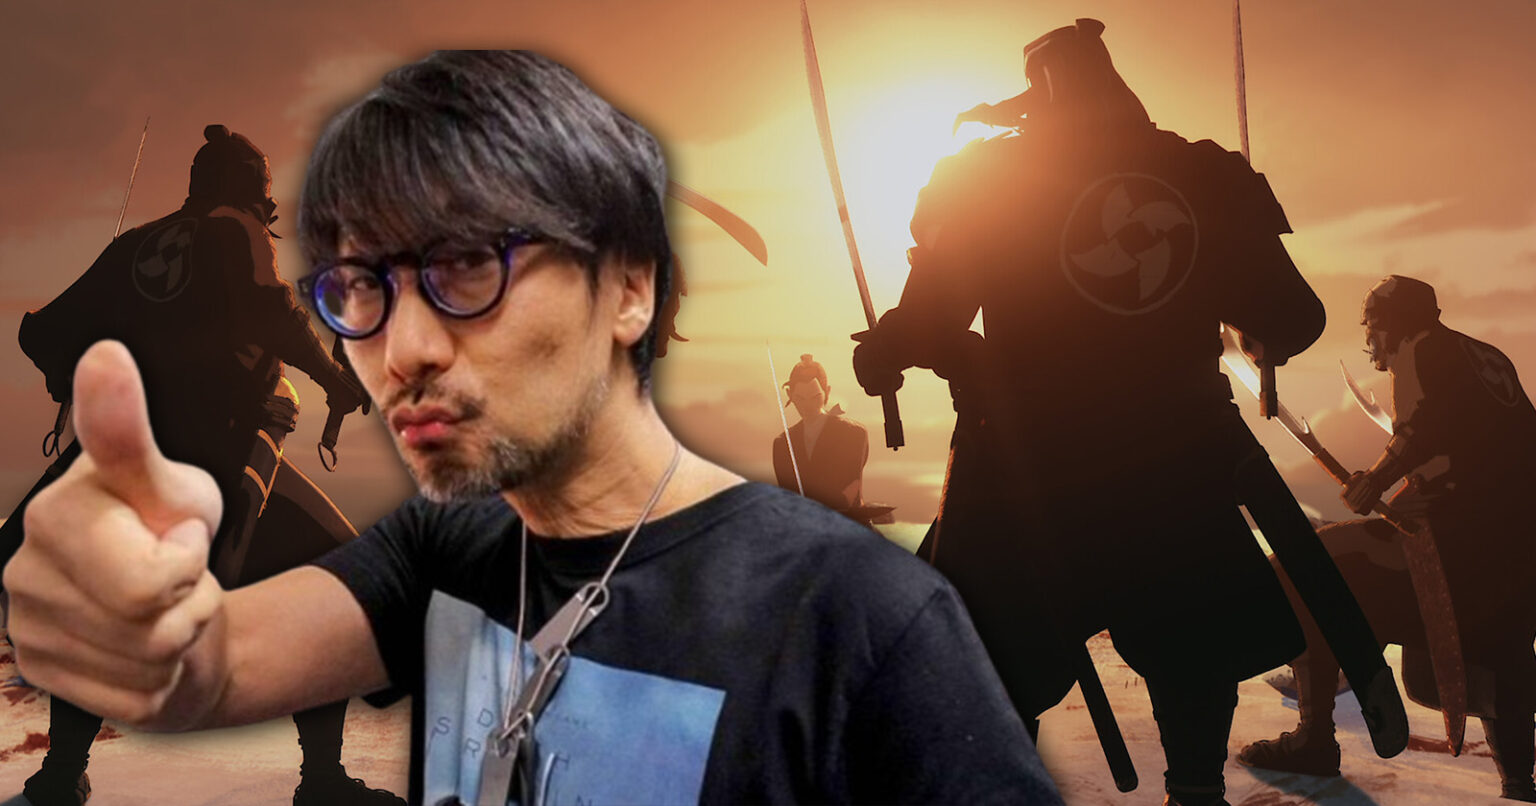 Is this a real Hideo Kojima Twitter account? : r/Kojima